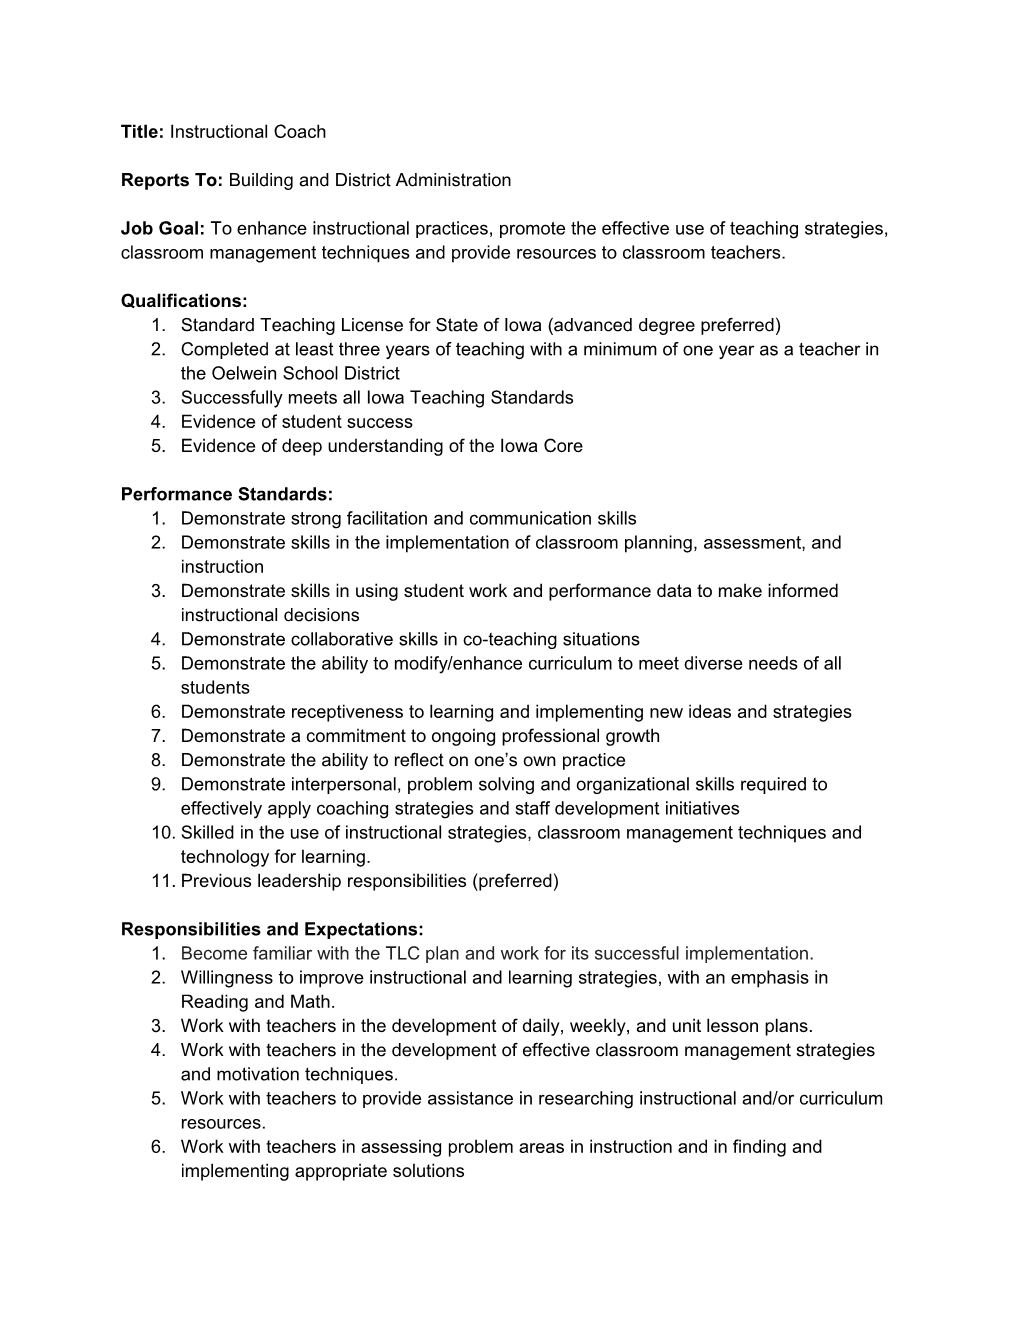 Copy of Instructional Coach Job Description